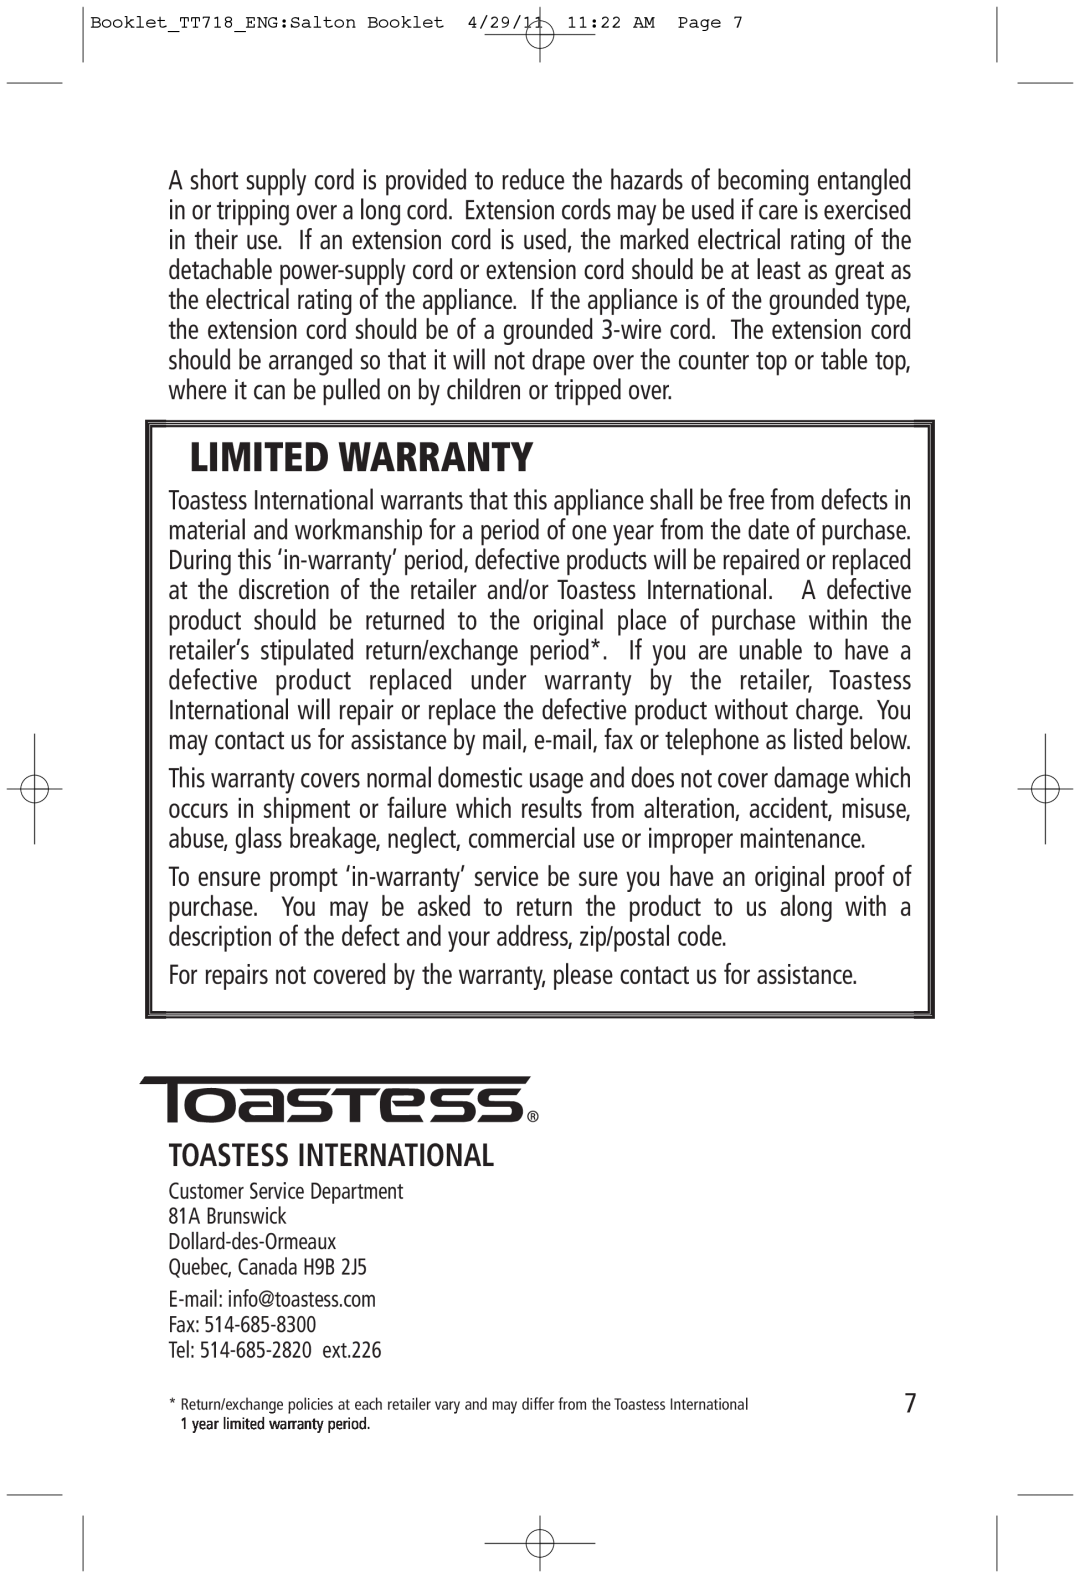 Toastess TT718 manual Toastess International, Limited Warranty, Tel 514-685-2820ext.226 